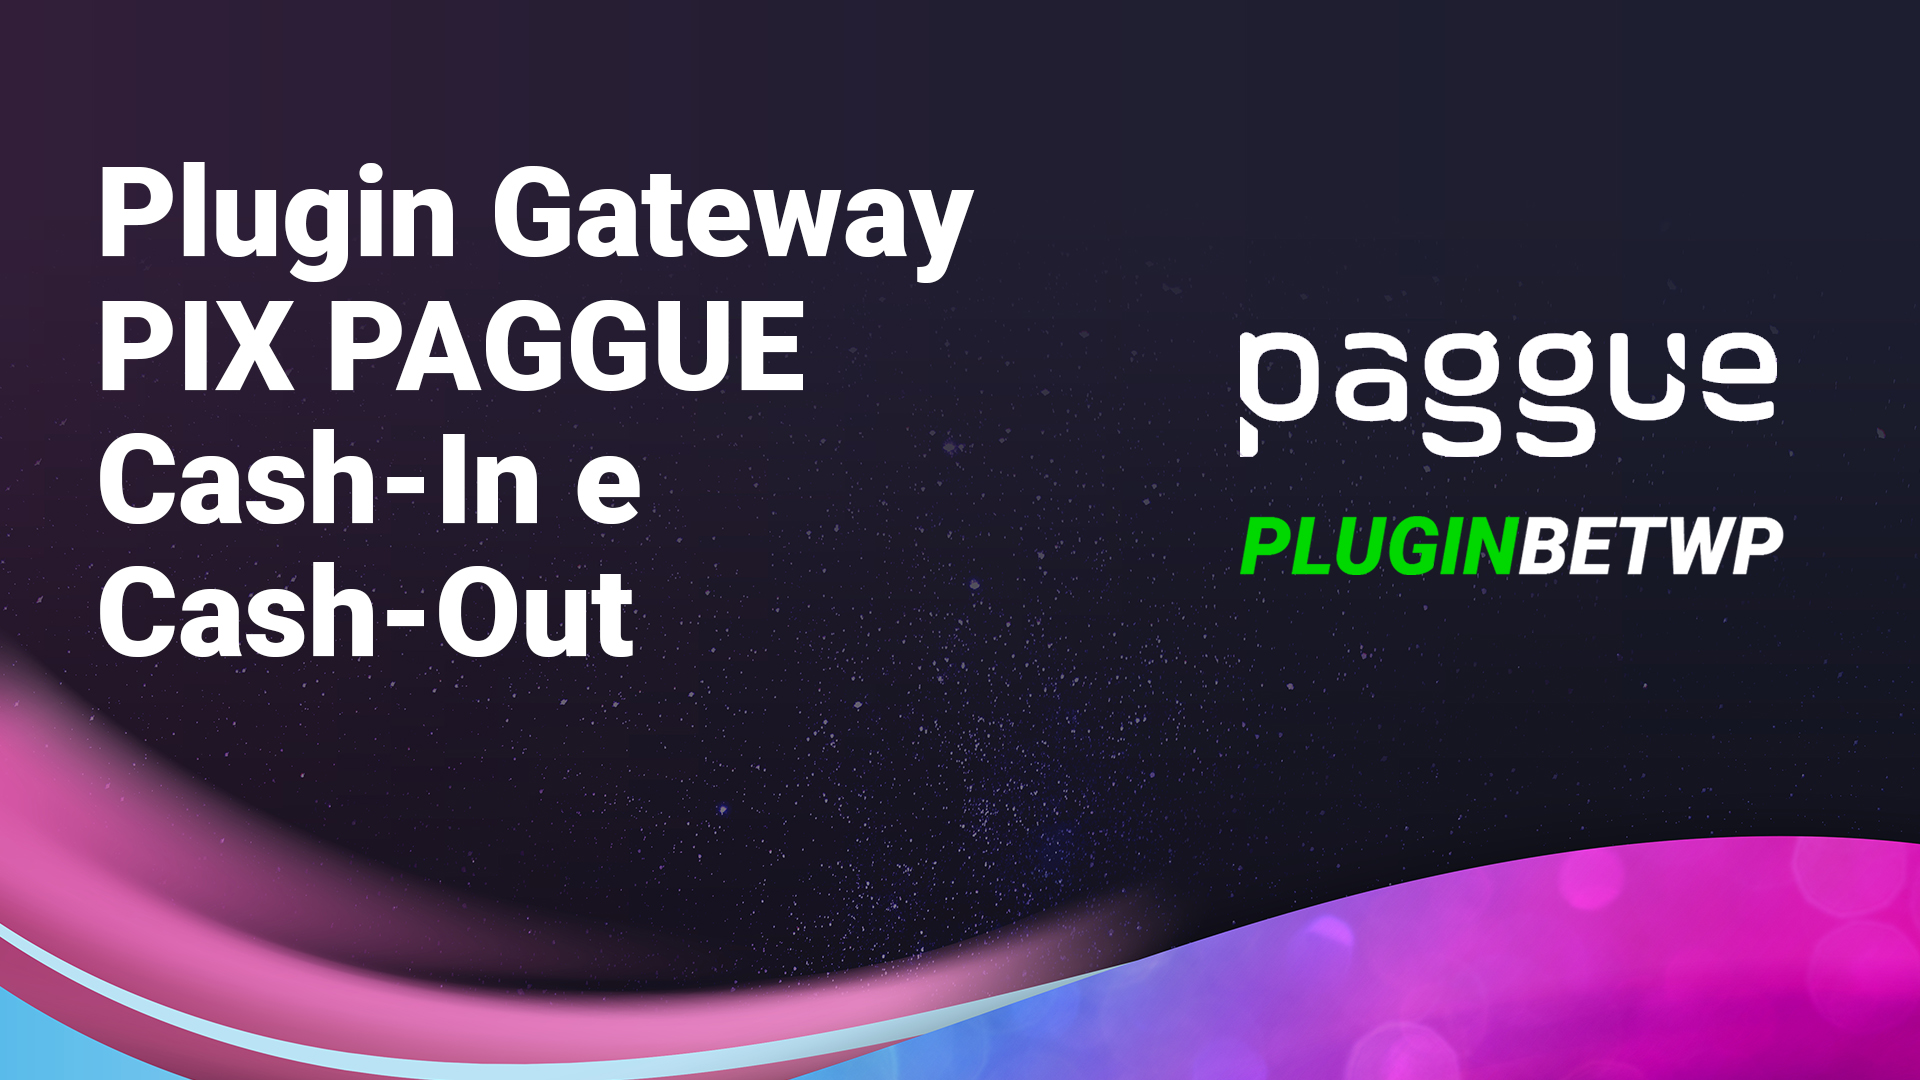 Plugin Gateway PIX Paggue Cash-In e Cash-Out para Plataforma BETWP